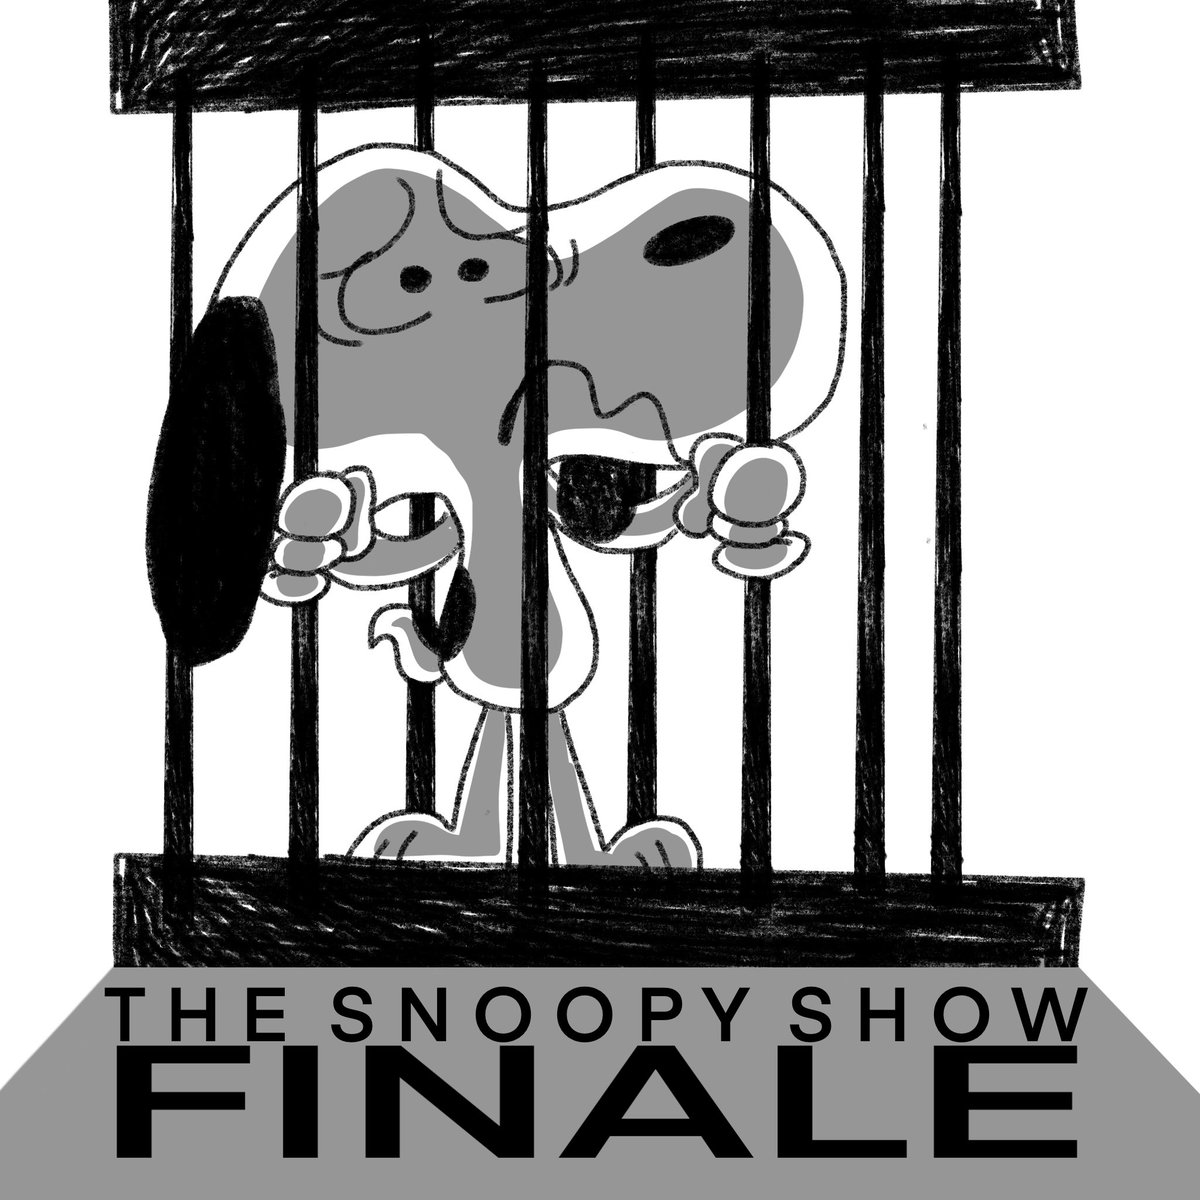 Please, @AppleTV Make It Happen! #thesnoopyshow #finalepisode #peanuts #charliebrown